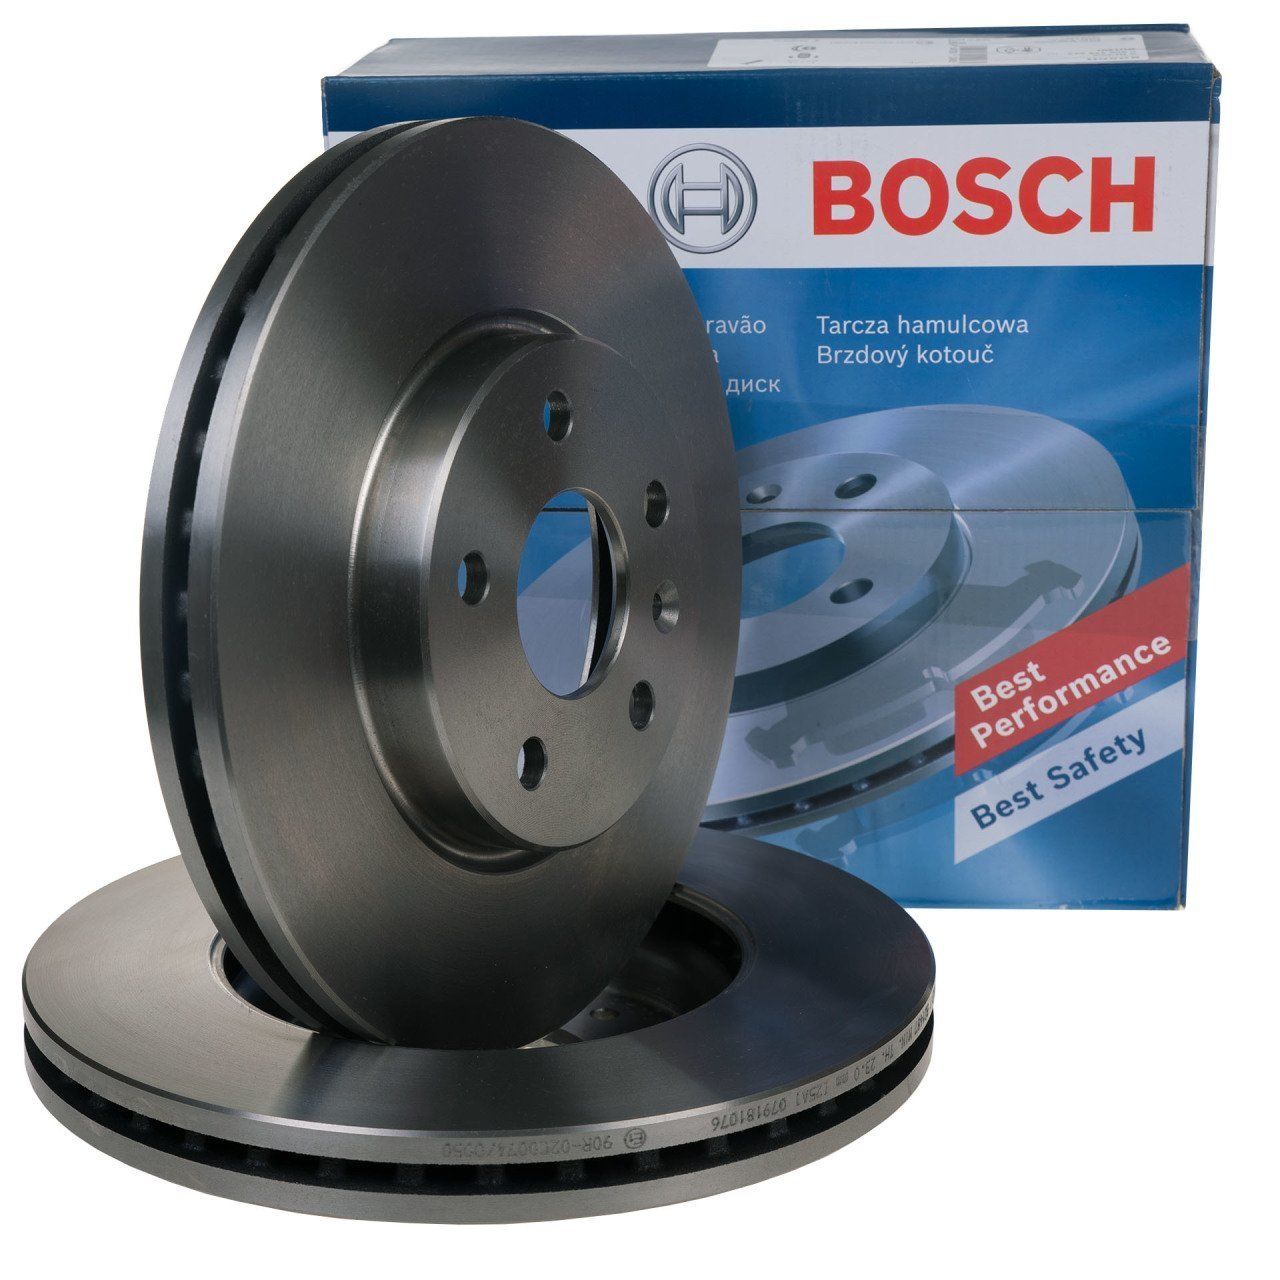 Ford Kuga 2010-2012 Ön Fren Disk Takımı 300mm Bosch Marka